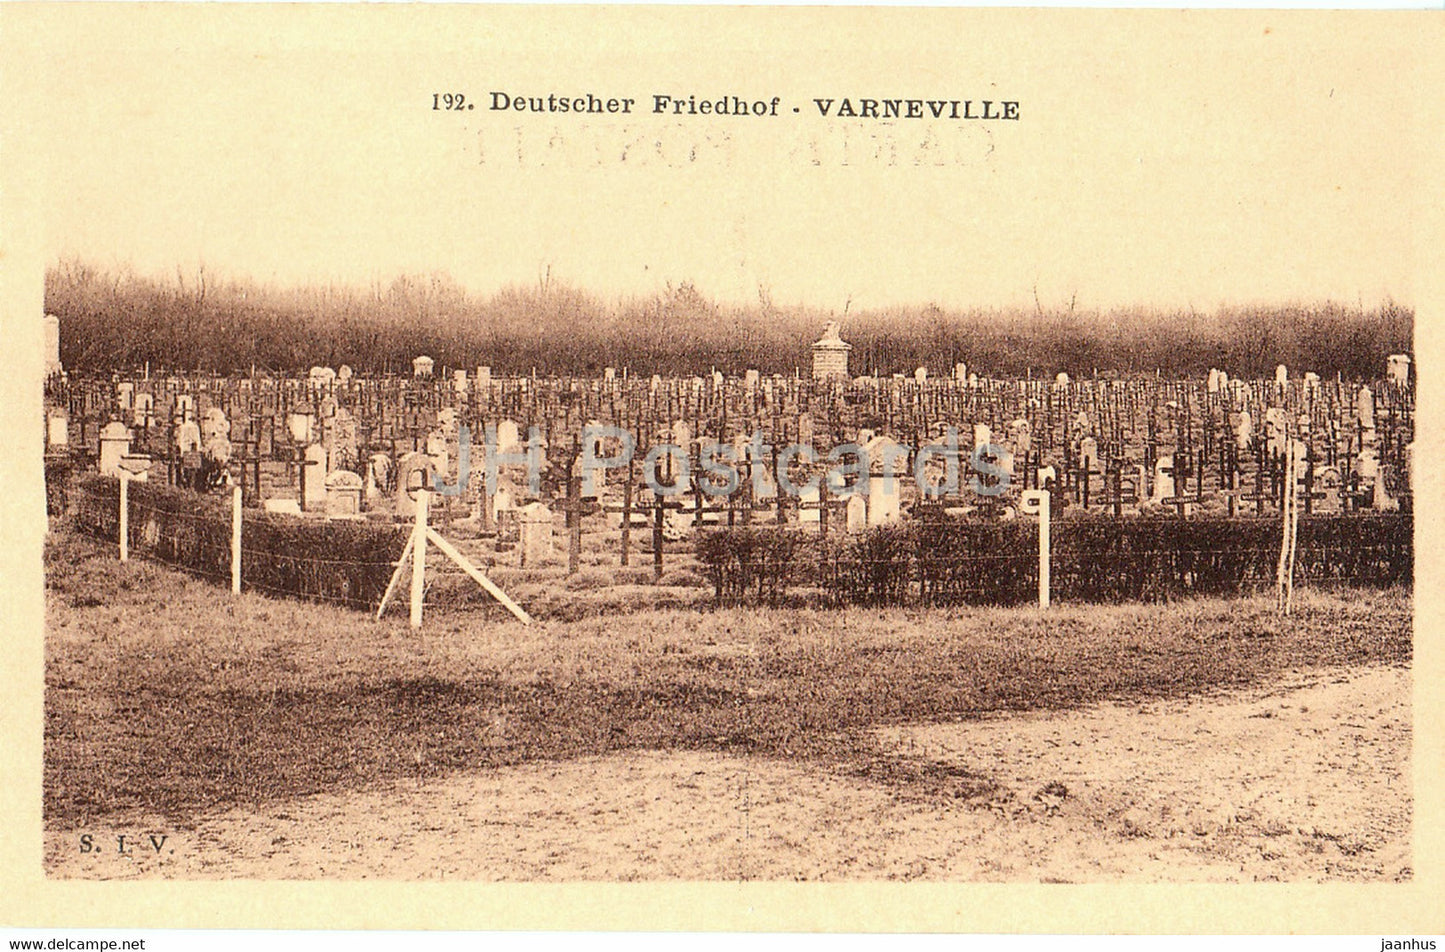 Varneville - Deutscher Friedhof - cemetery - military - WWI - 192 - old postcard - France - unused - JH Postcards